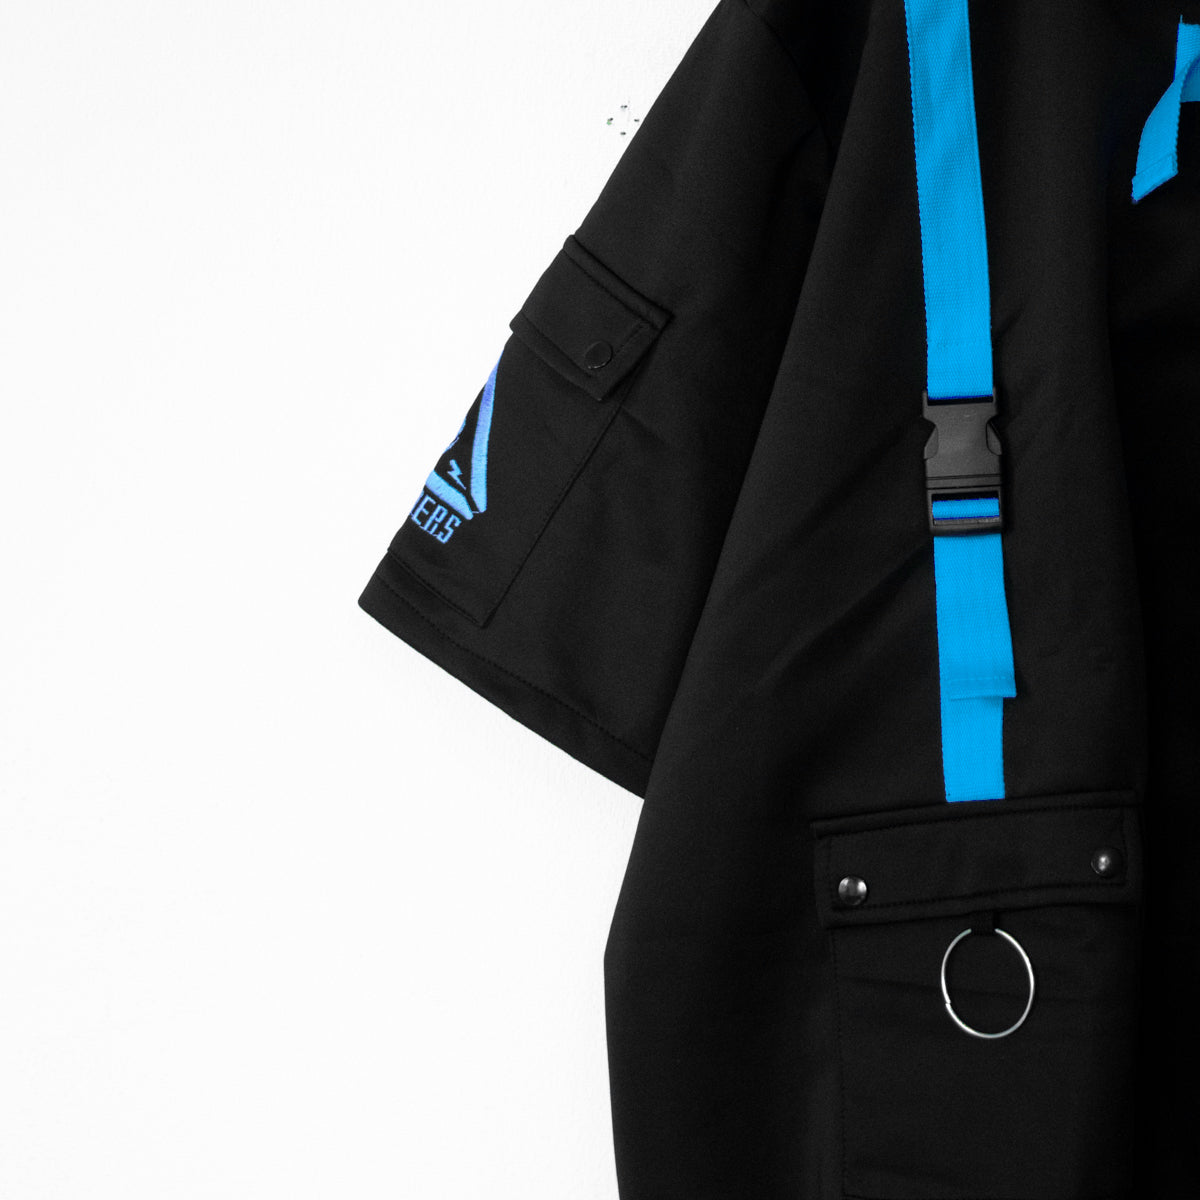 ACDC Rag Cyber __PUNK Modeling Jacket Short Sleeve Ver NEON BLUE BLACK